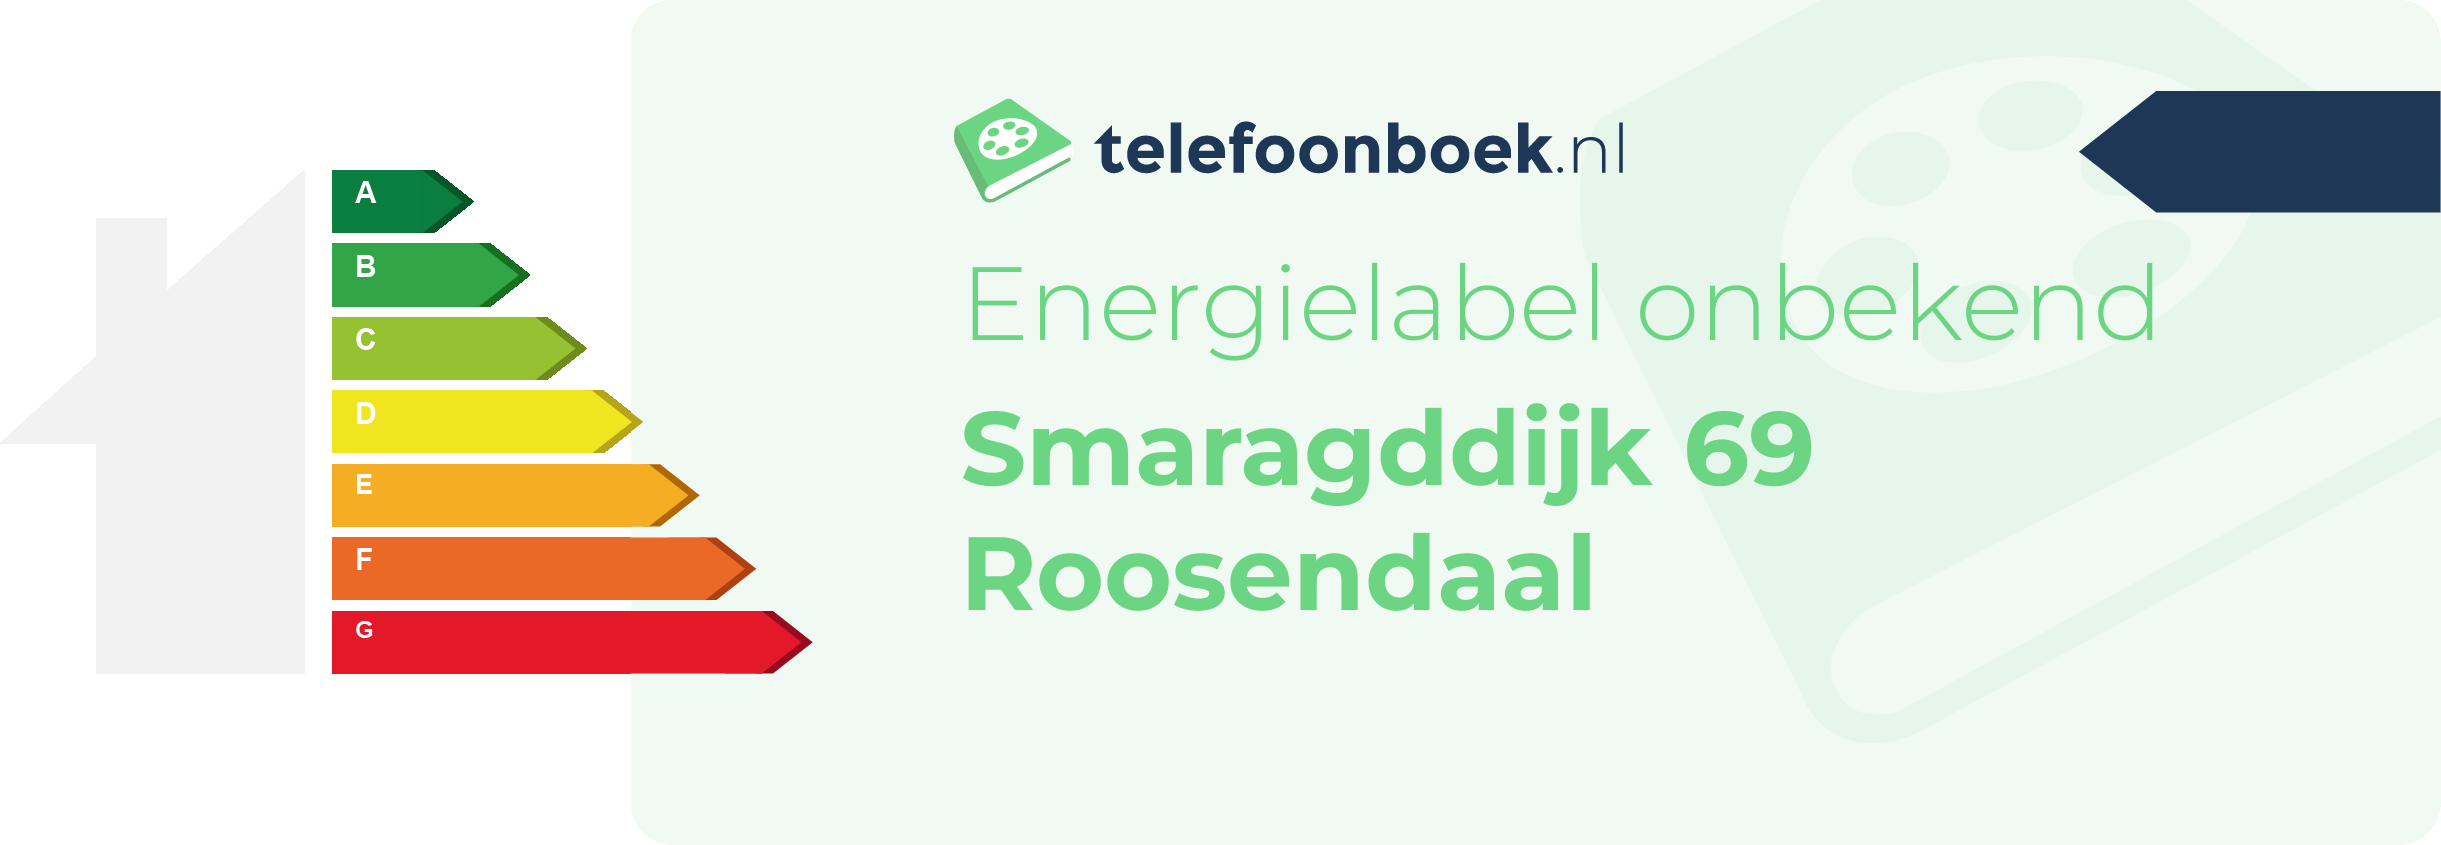 Energielabel Smaragddijk 69 Roosendaal